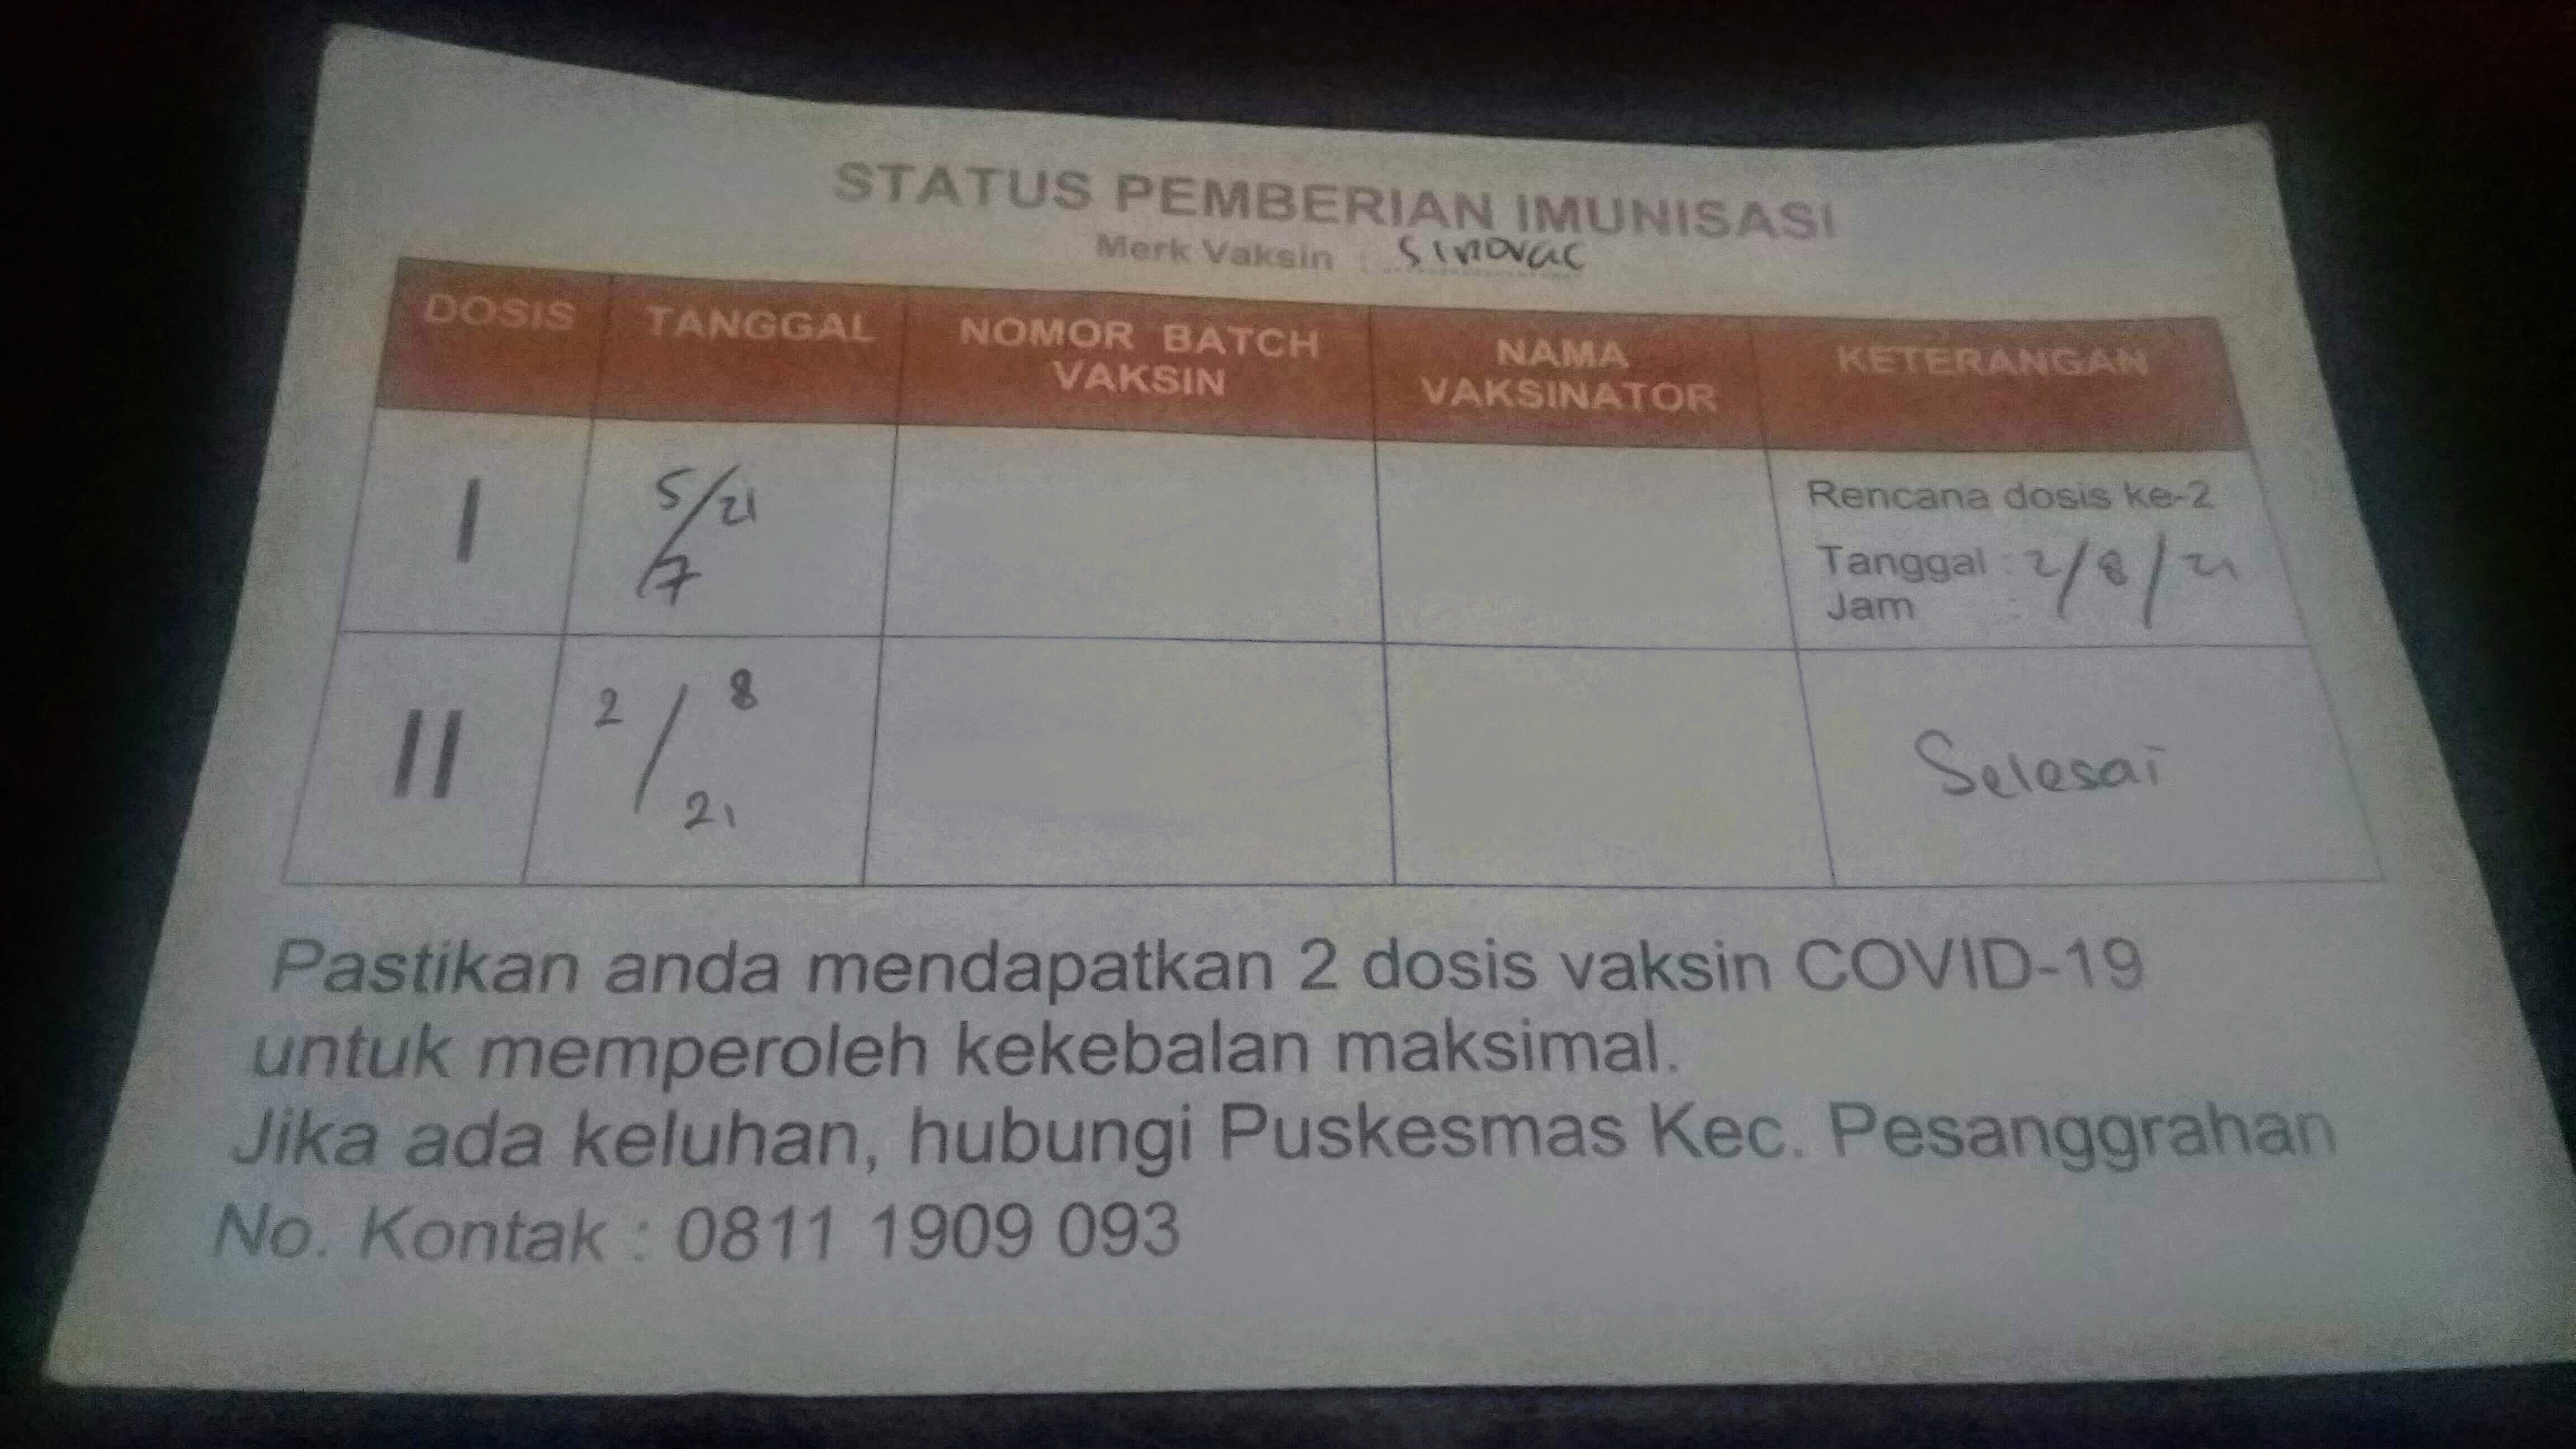 File:Indonesian Covid-19 vaccination card.jpg - Wikipedia